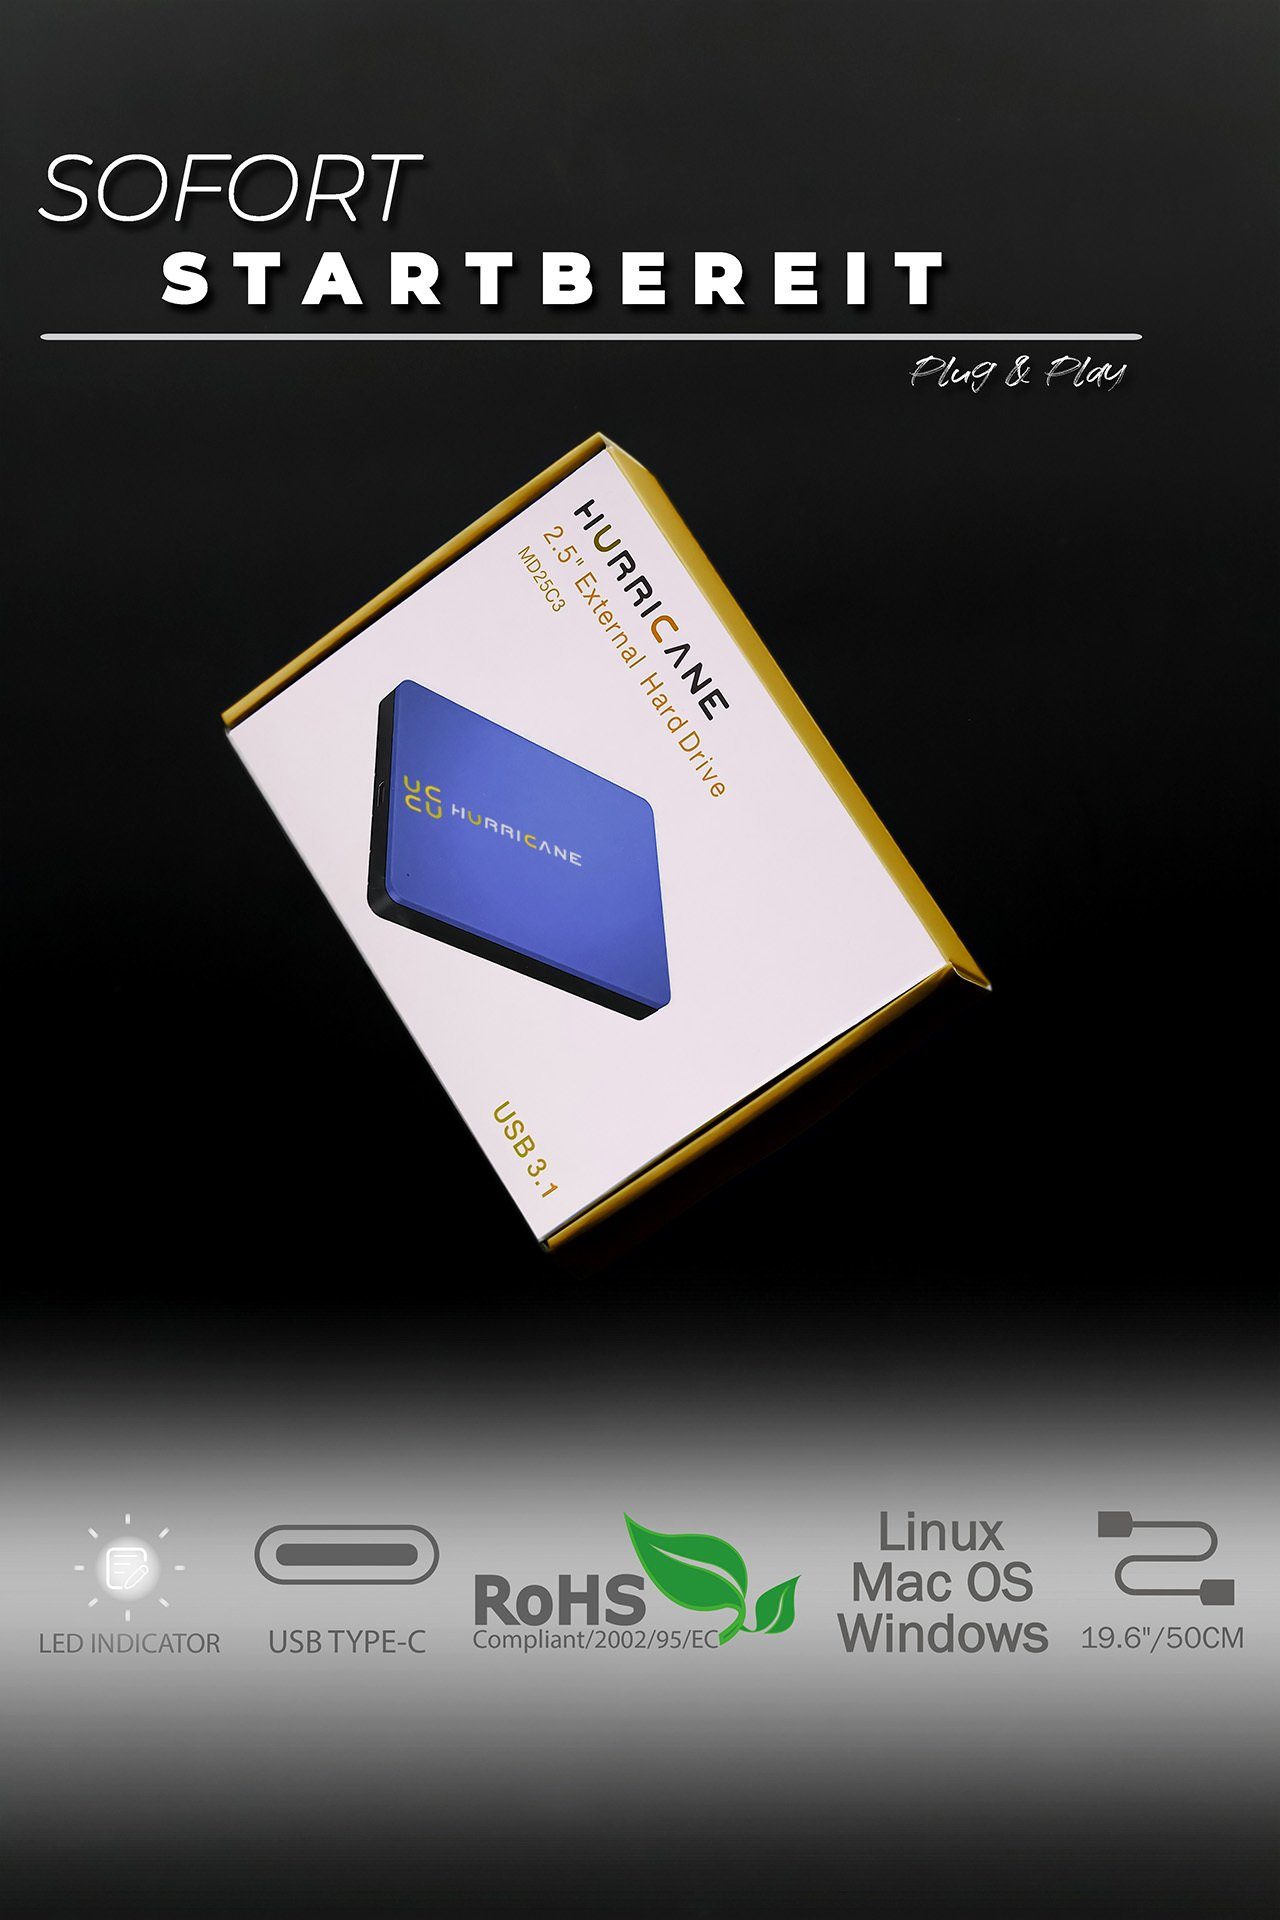 MD25C3 (500GB) und USB 2,5", smart kompatibel Mac Linux 2,5" TV Xbox, PS5 Laptop 500GB PS4 externe C Tragbare Festplatte HURRICANE Windows Externe mit für HDD-Festplatte